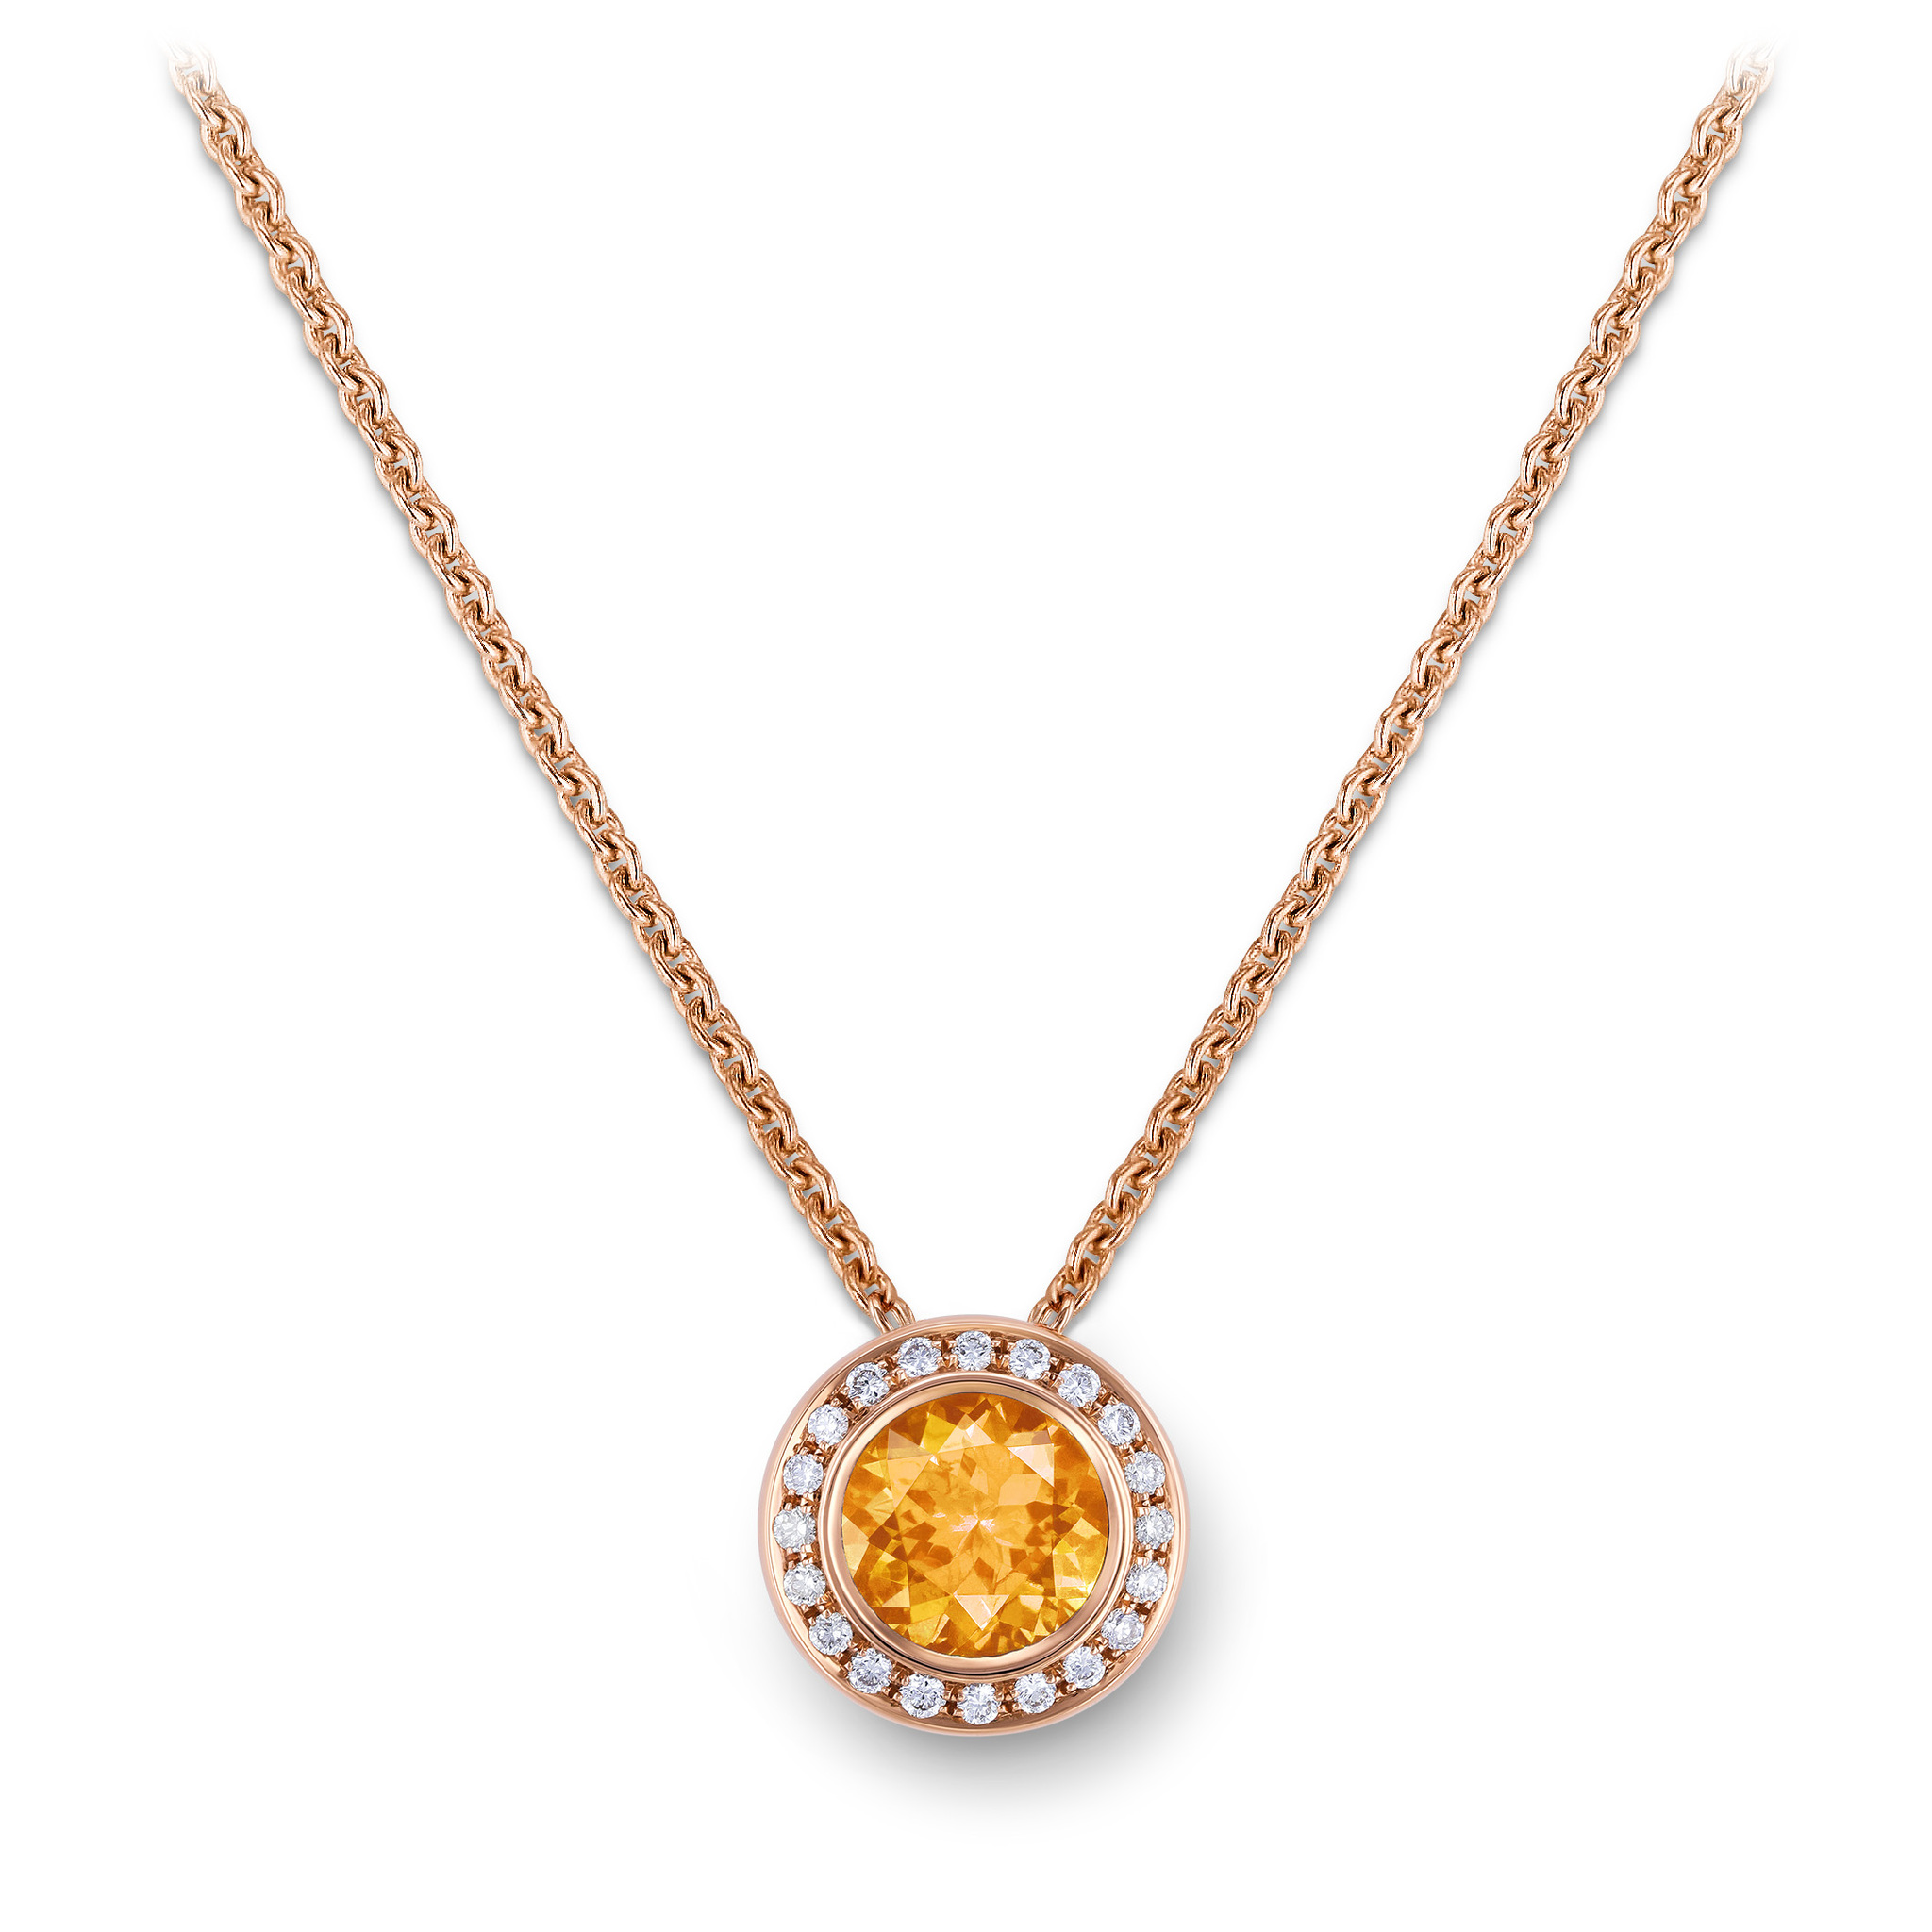 Necklace with mandarin garnet